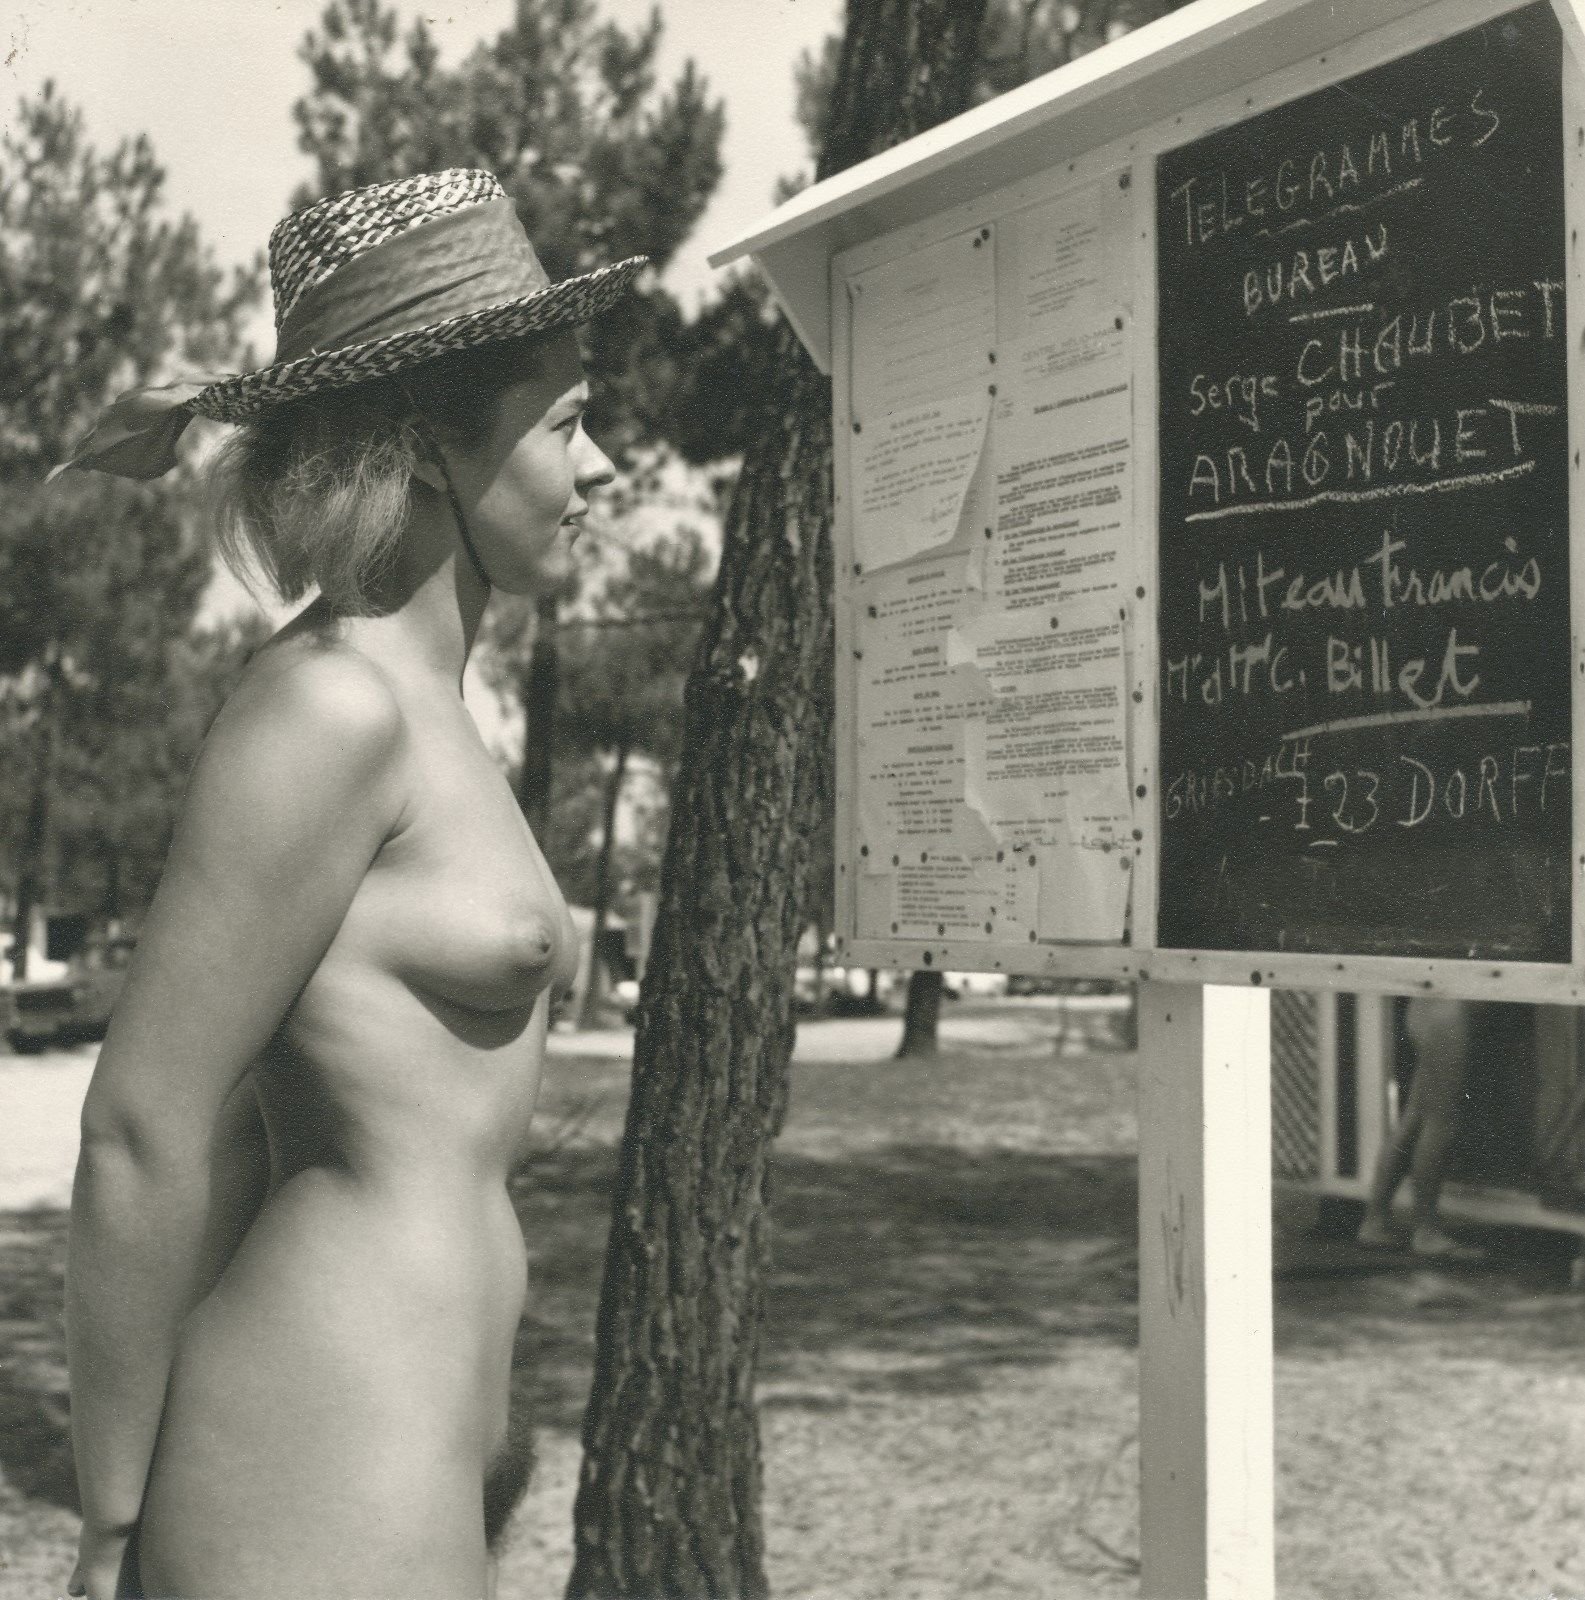 Classic nudists photos